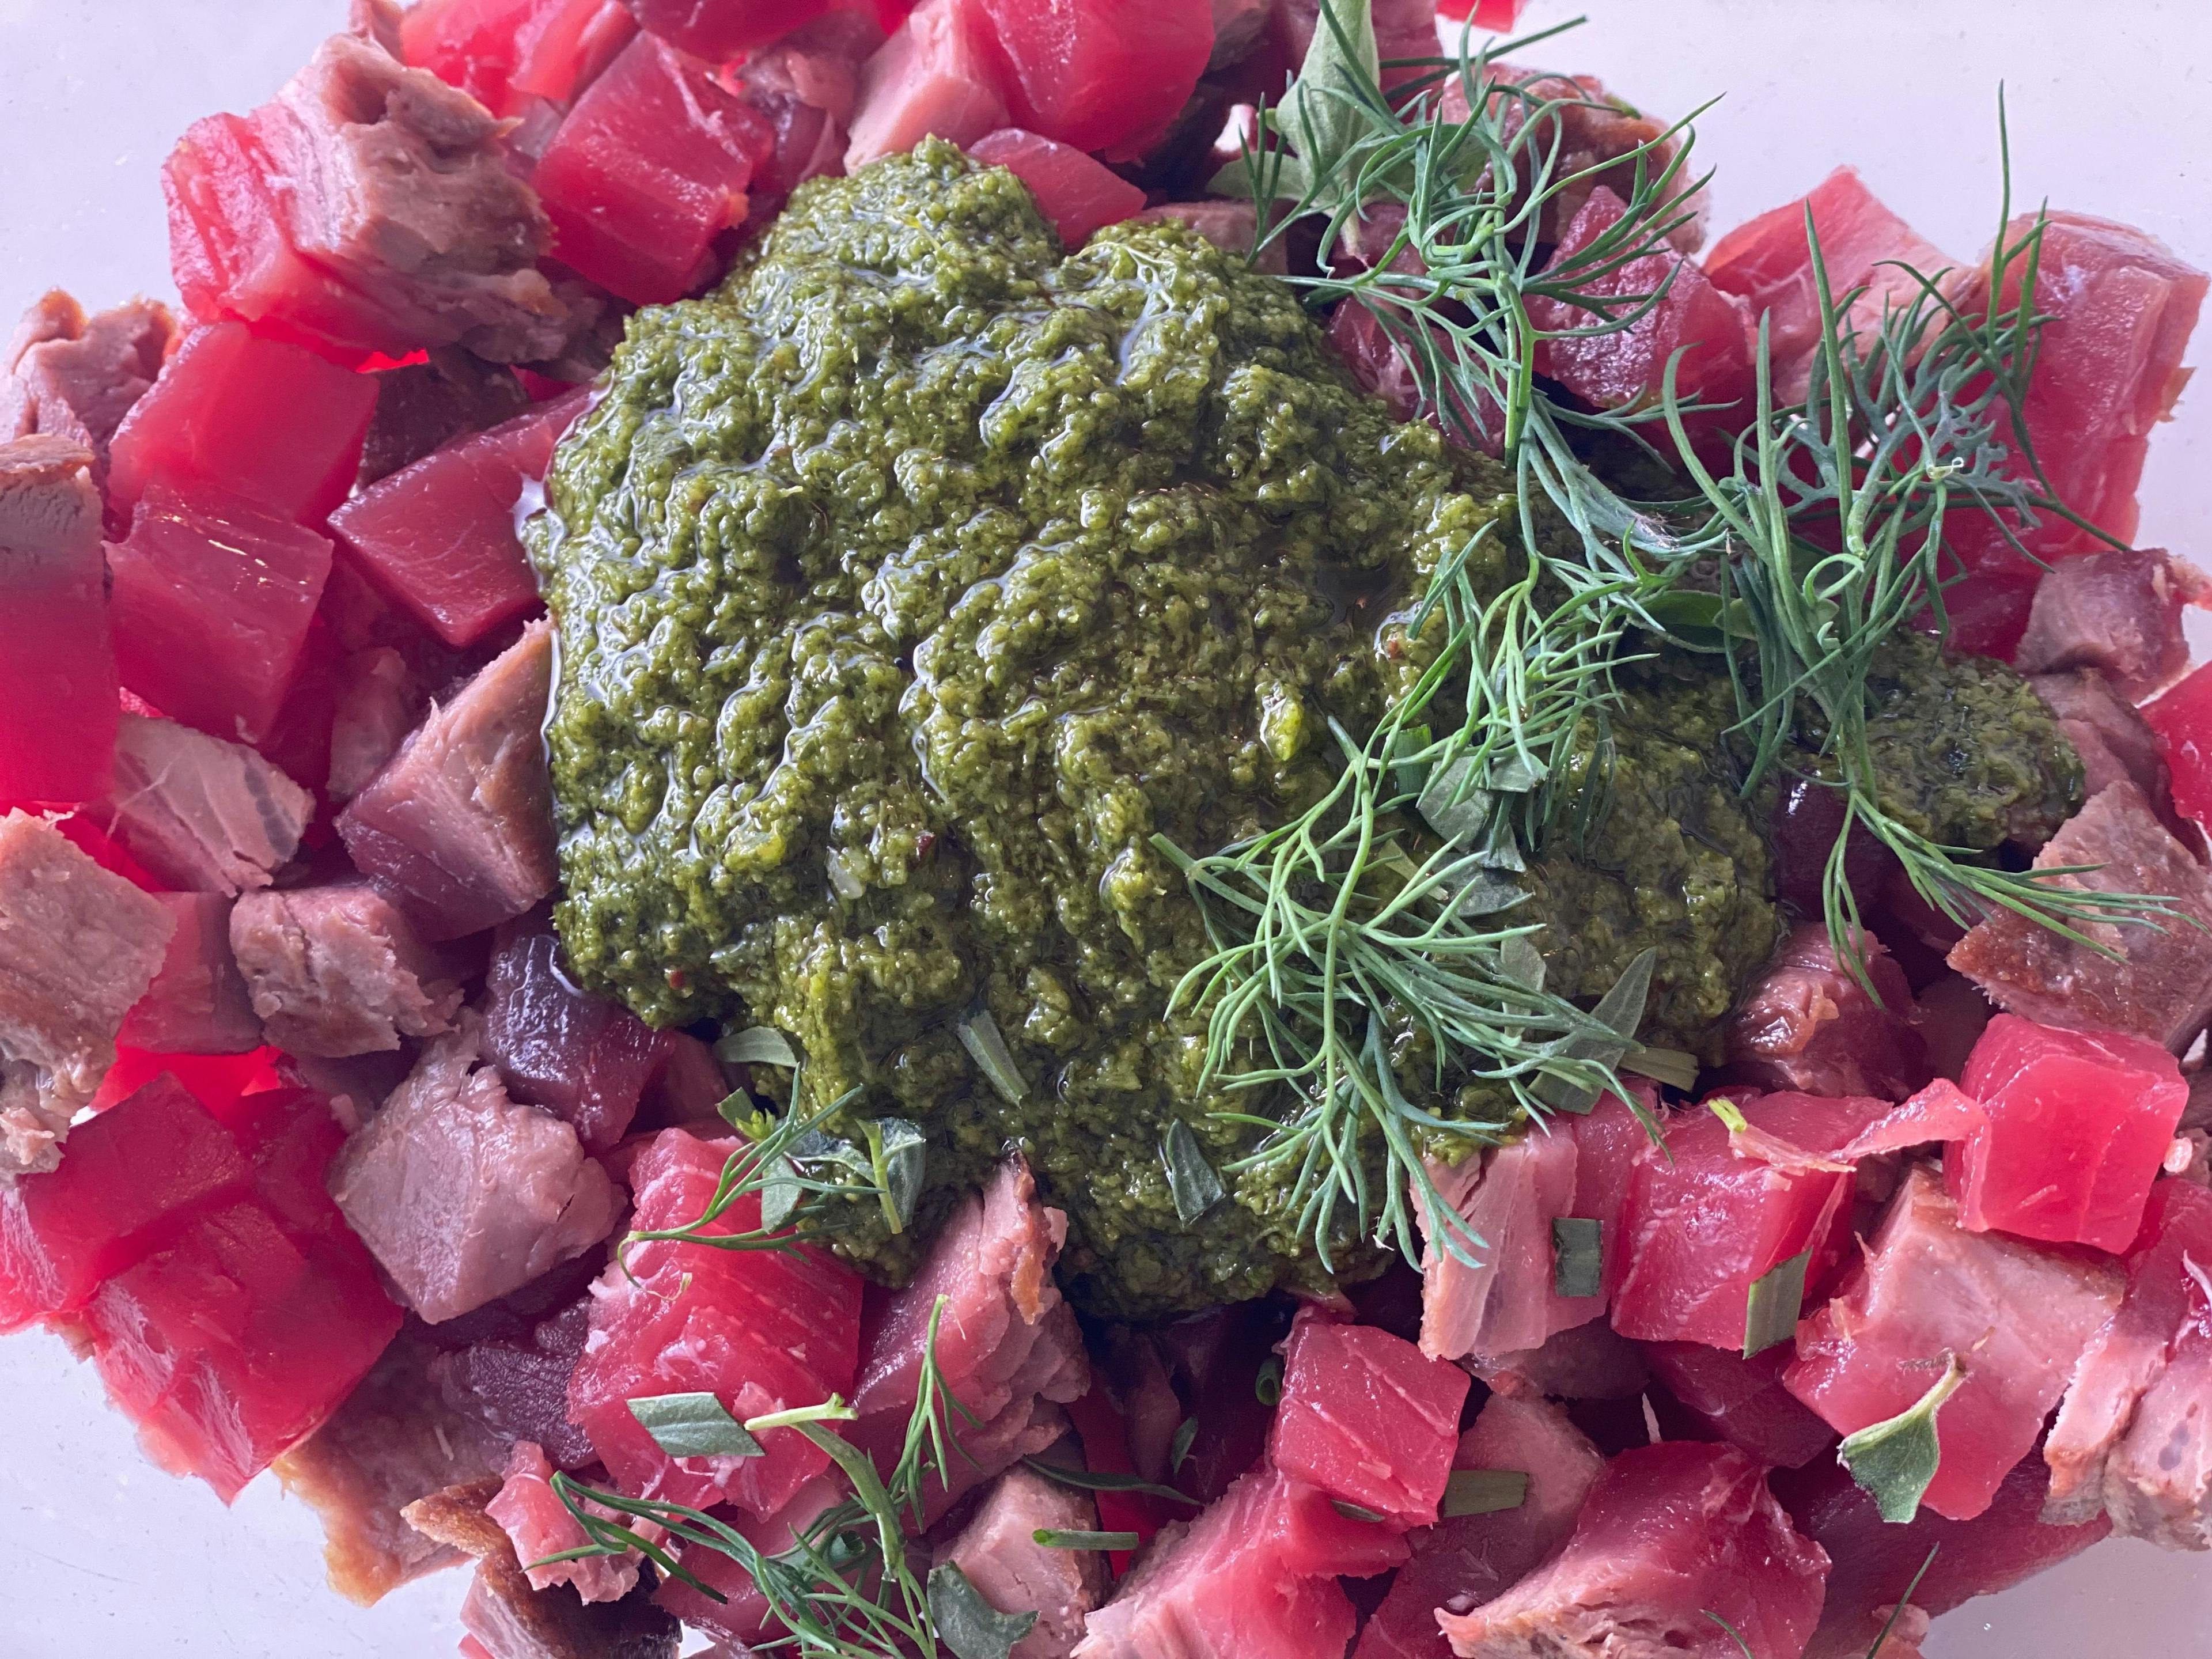 diced tuna with green sauce on top